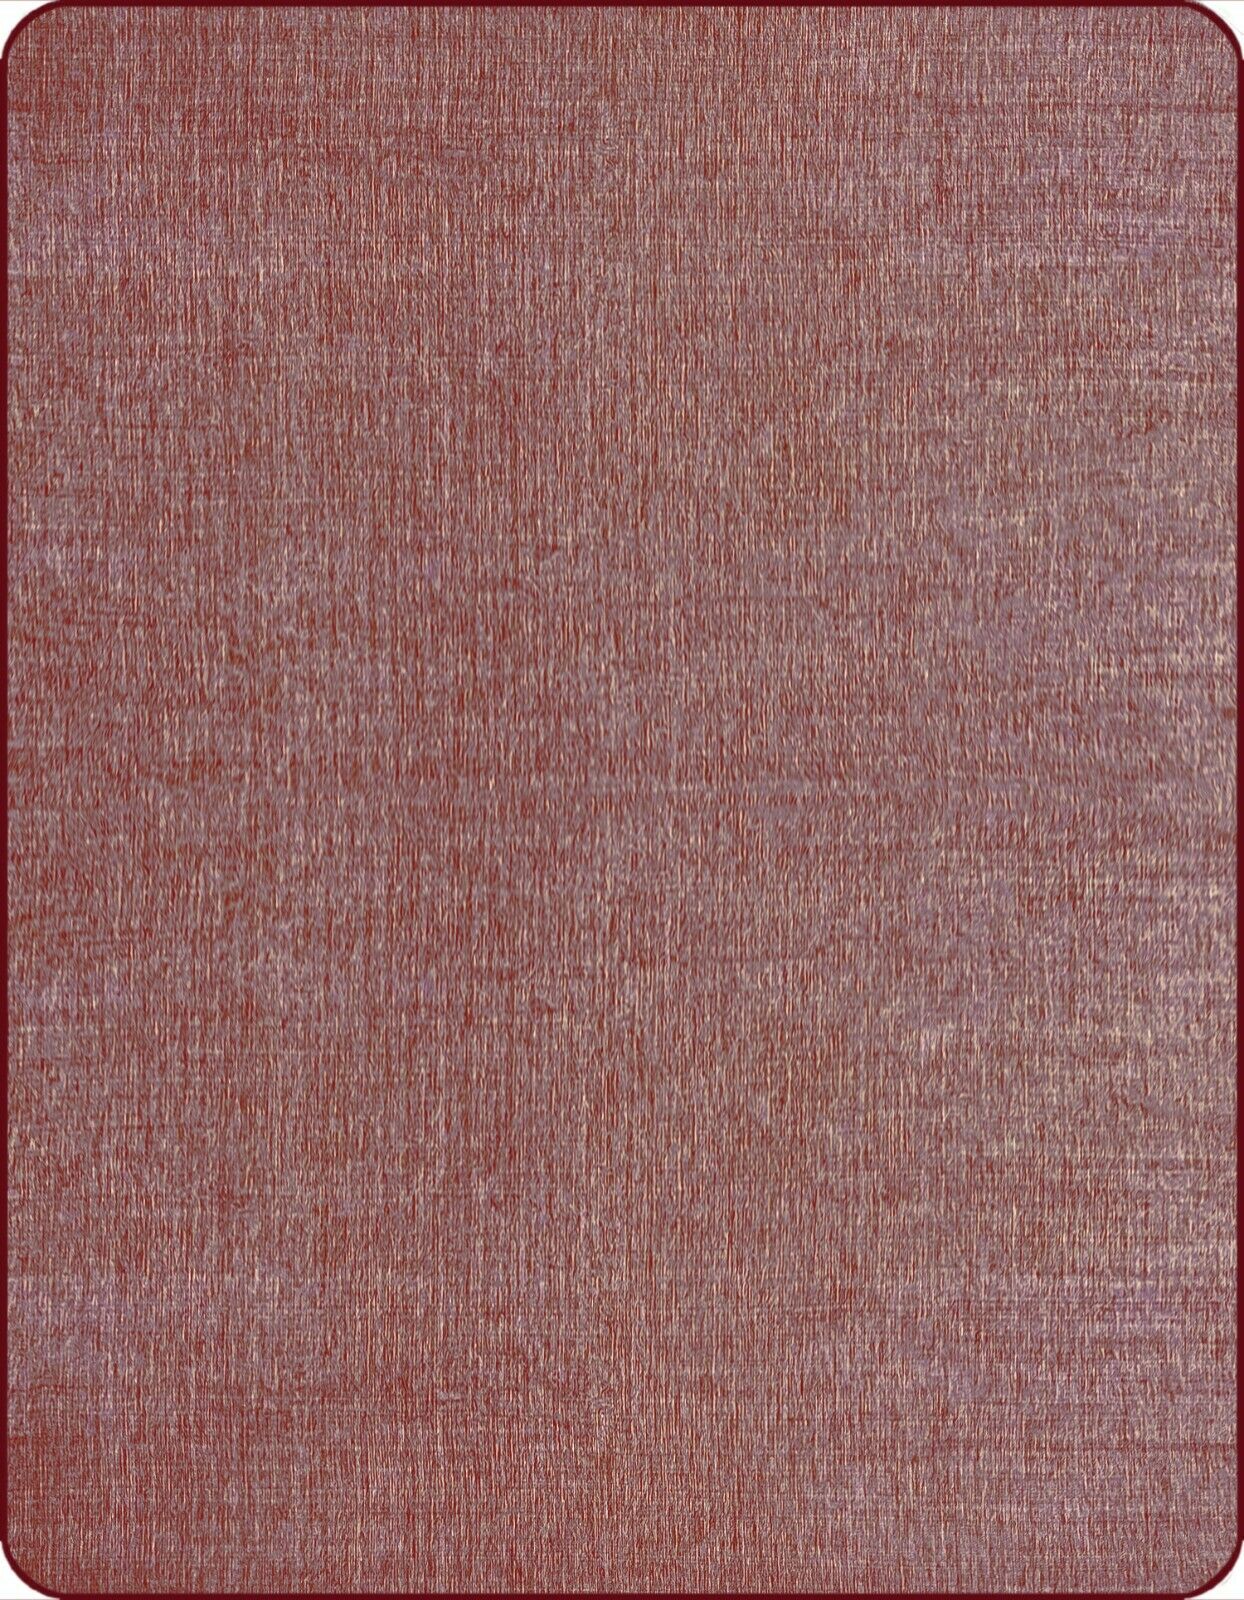 Zhuya - Baby Alpaca Wool Throw Blanket / Sofa Cover - Queen 90" x 67" - solid ecru / red mica pattern